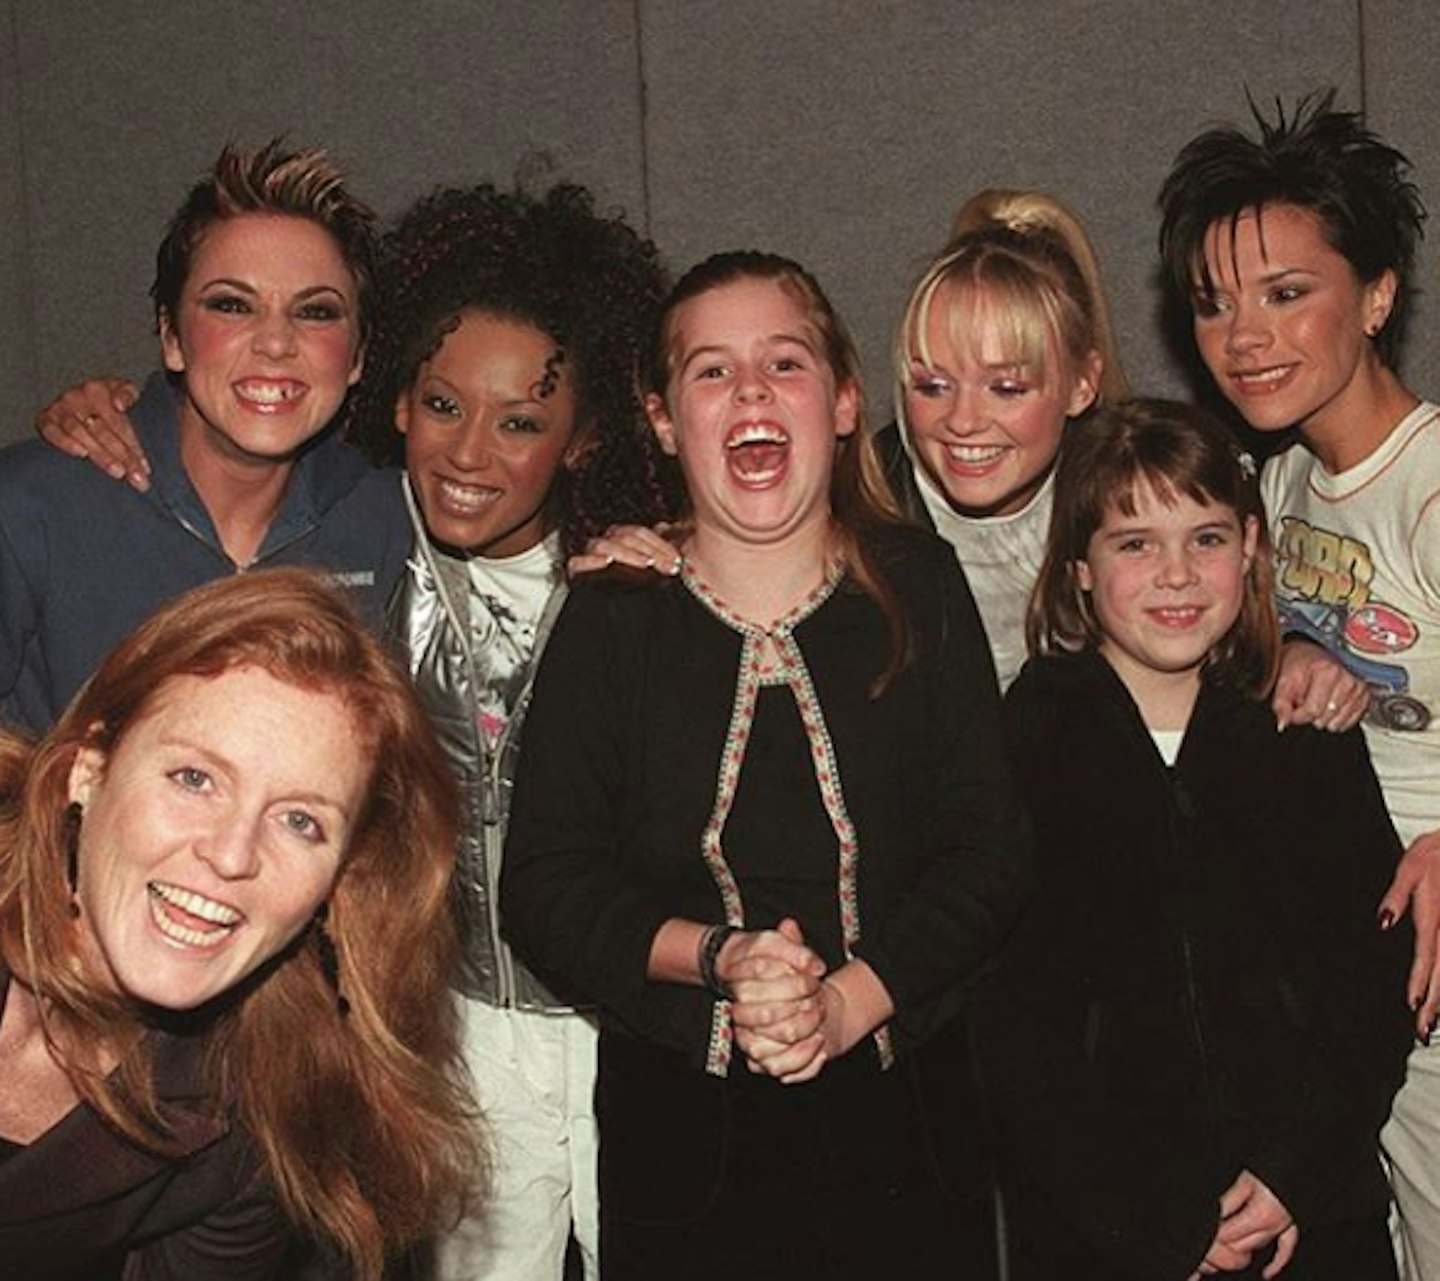 Spice Girls meet their biggest royal fans